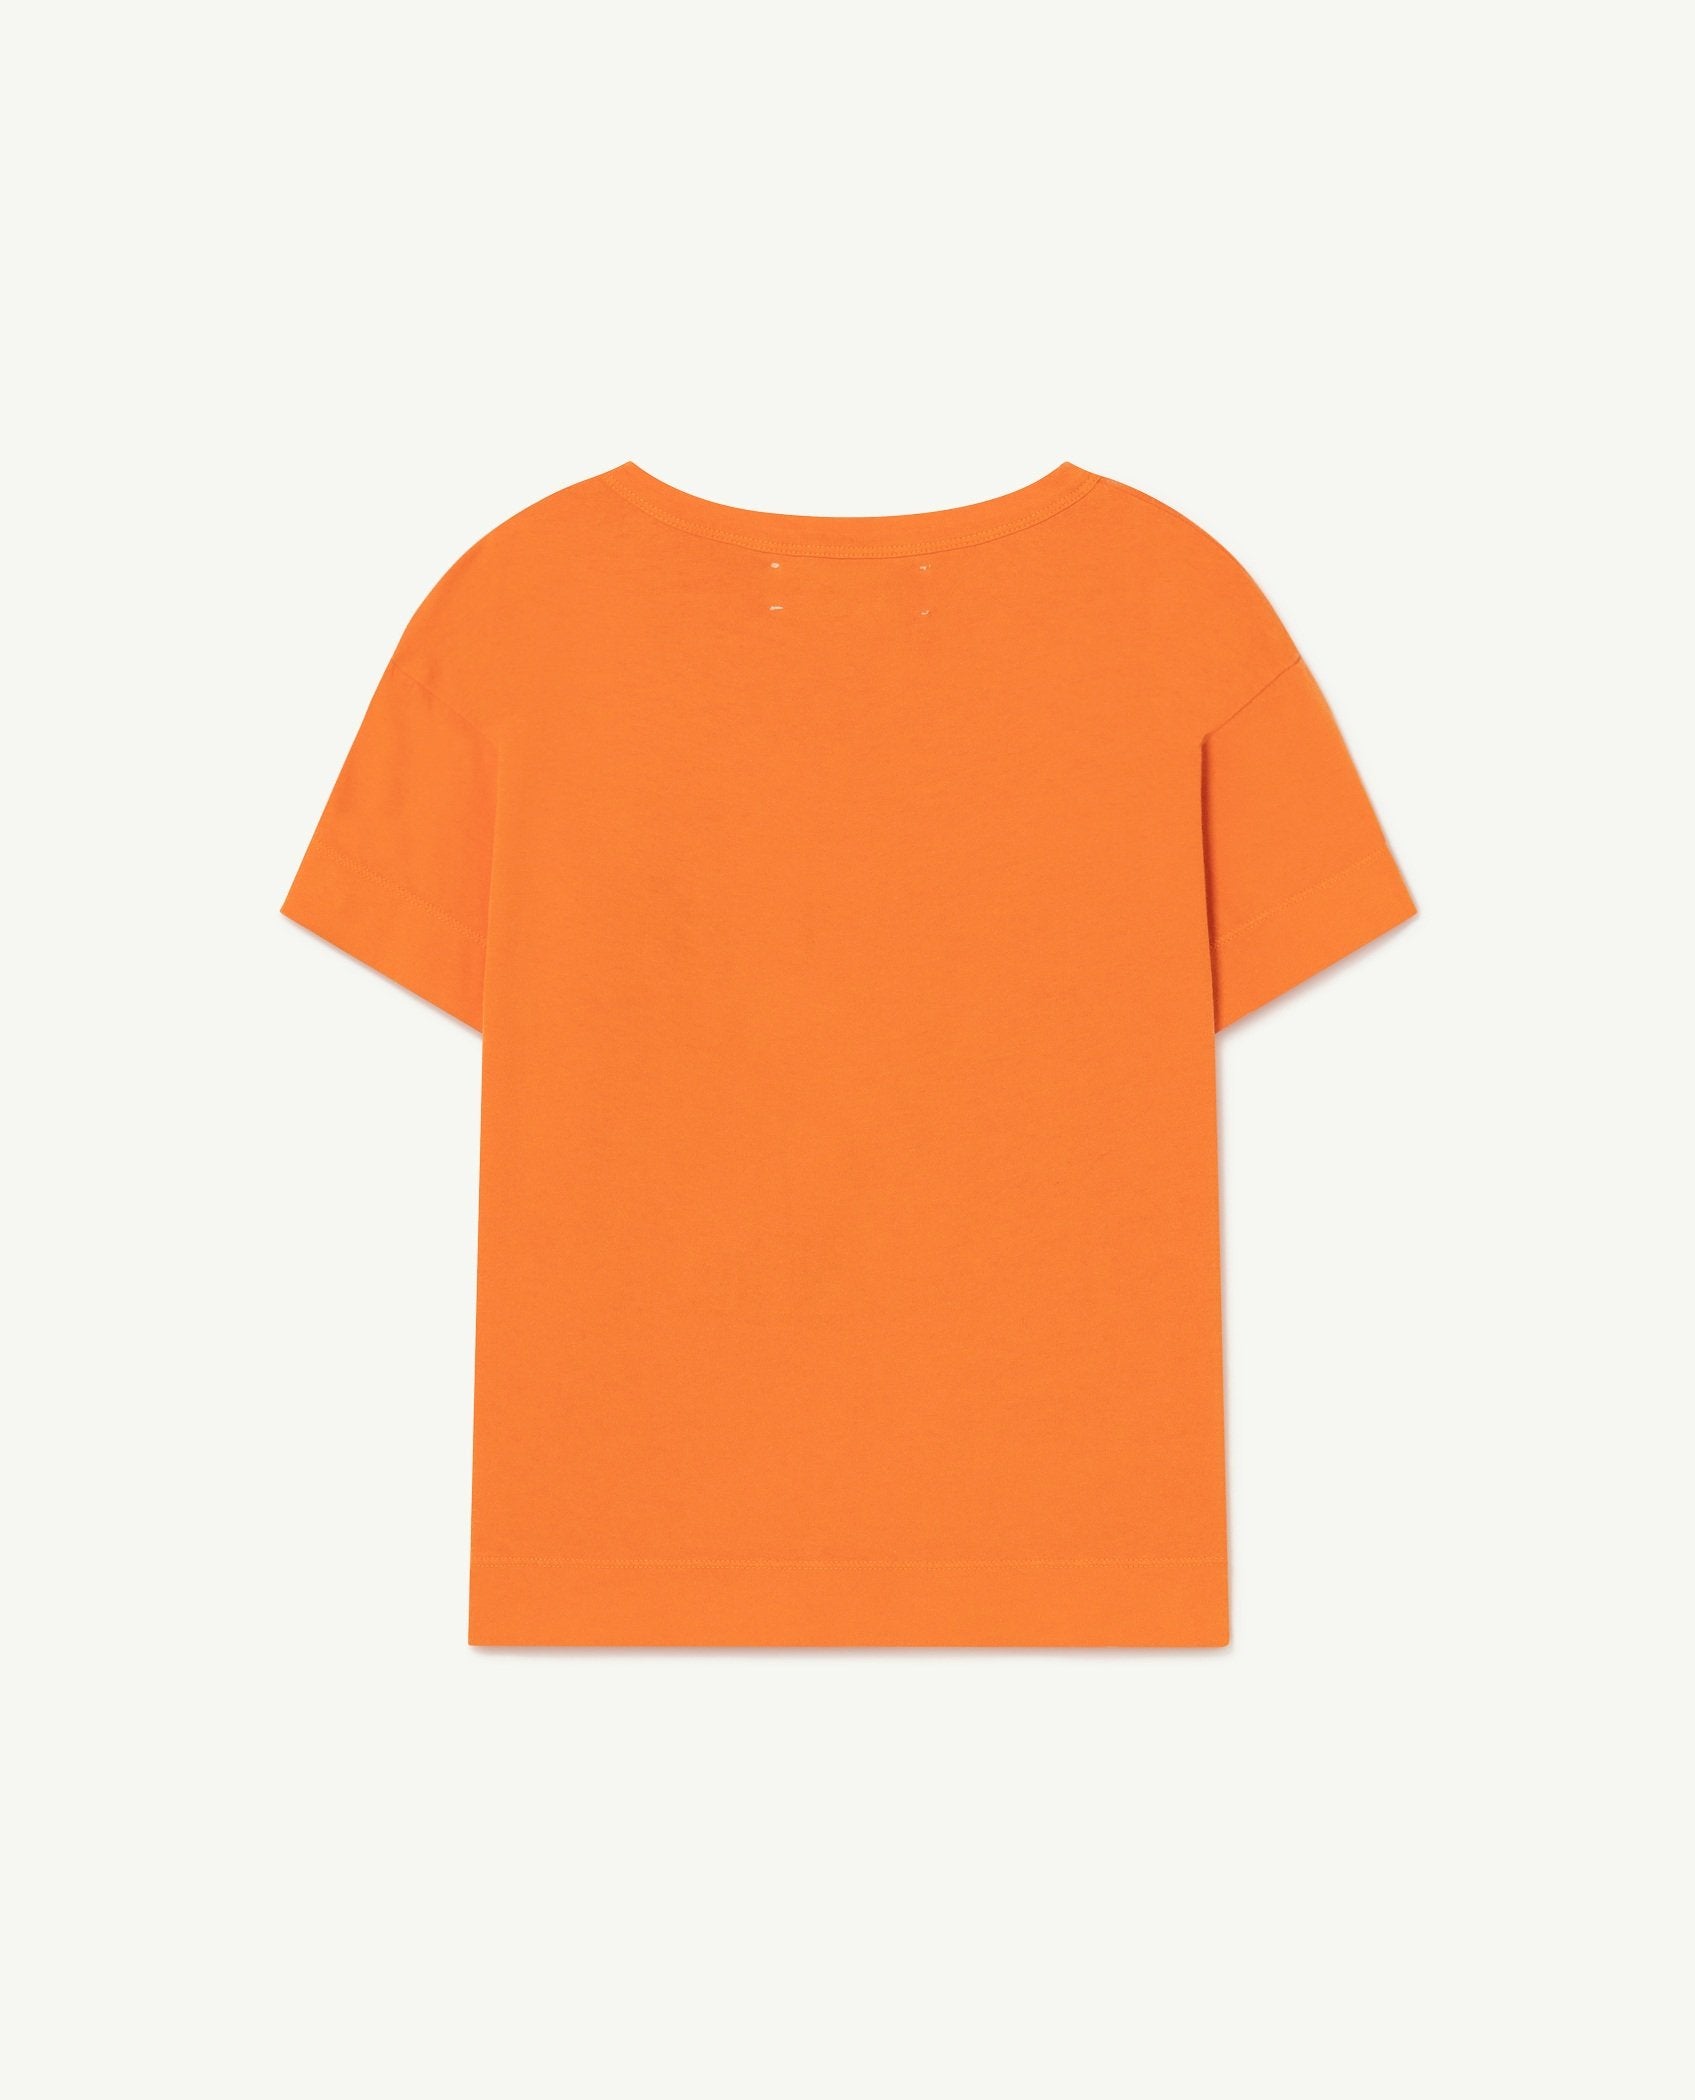 Orange Rooster Kids T-Shirt PRODUCT BACK